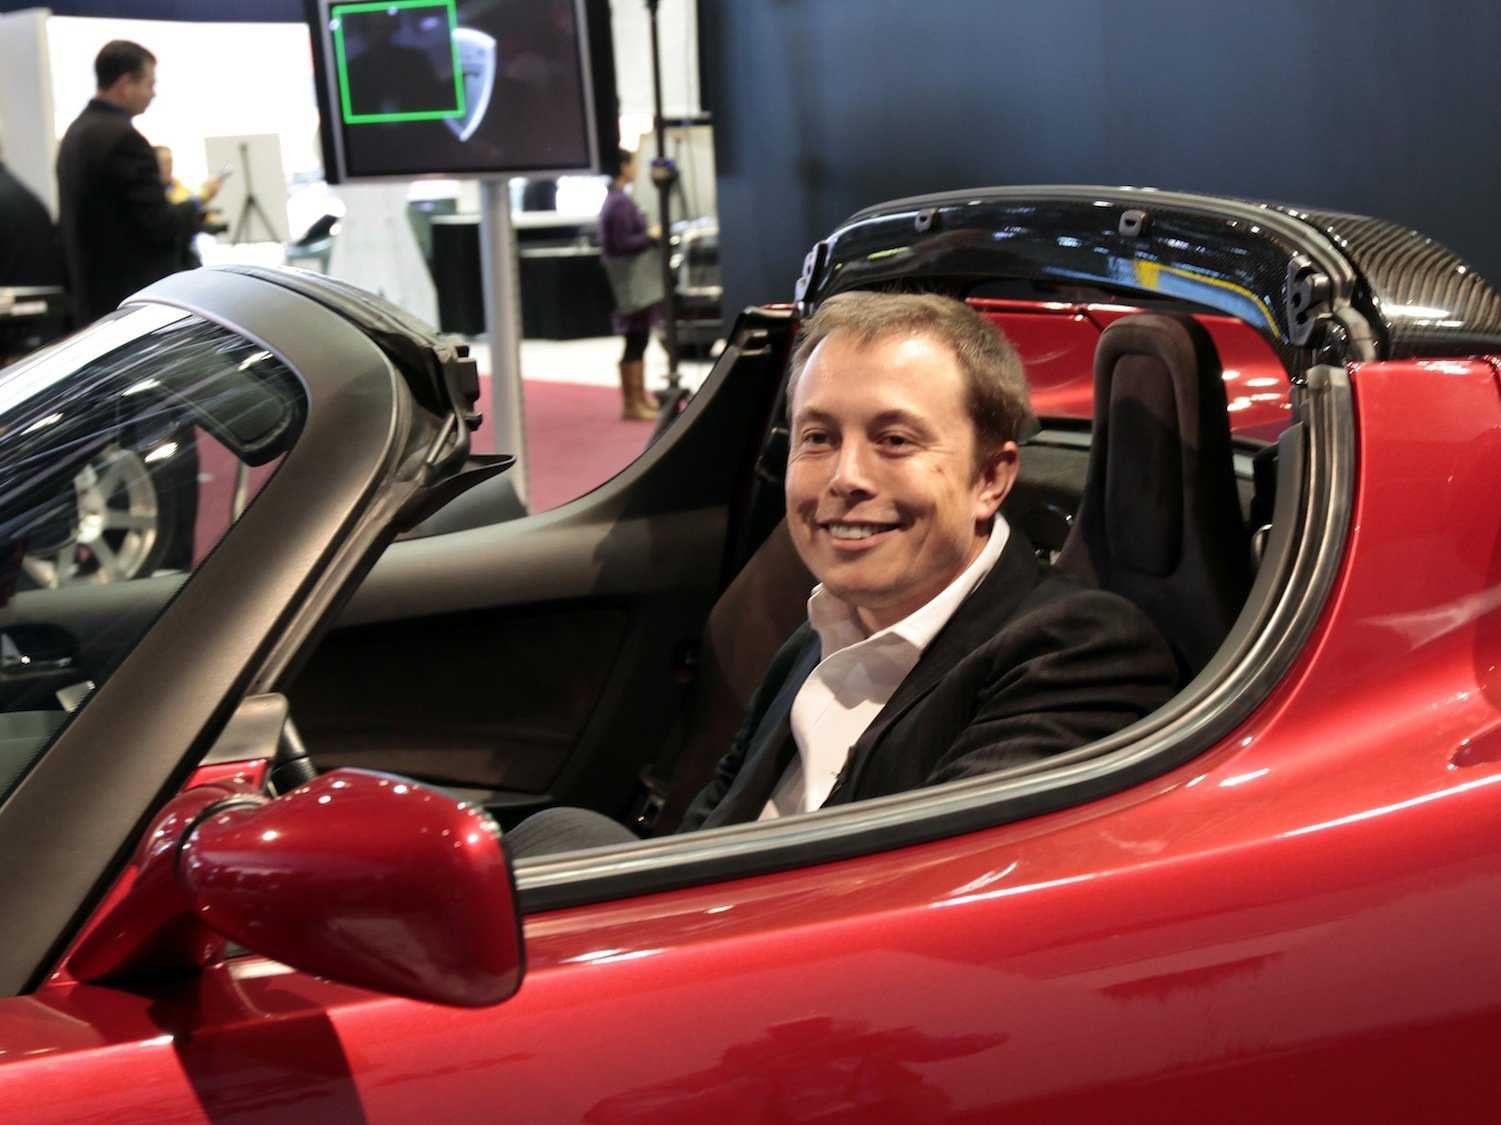 Elon Musk is putting his personal Tesla into Mars’ orbit